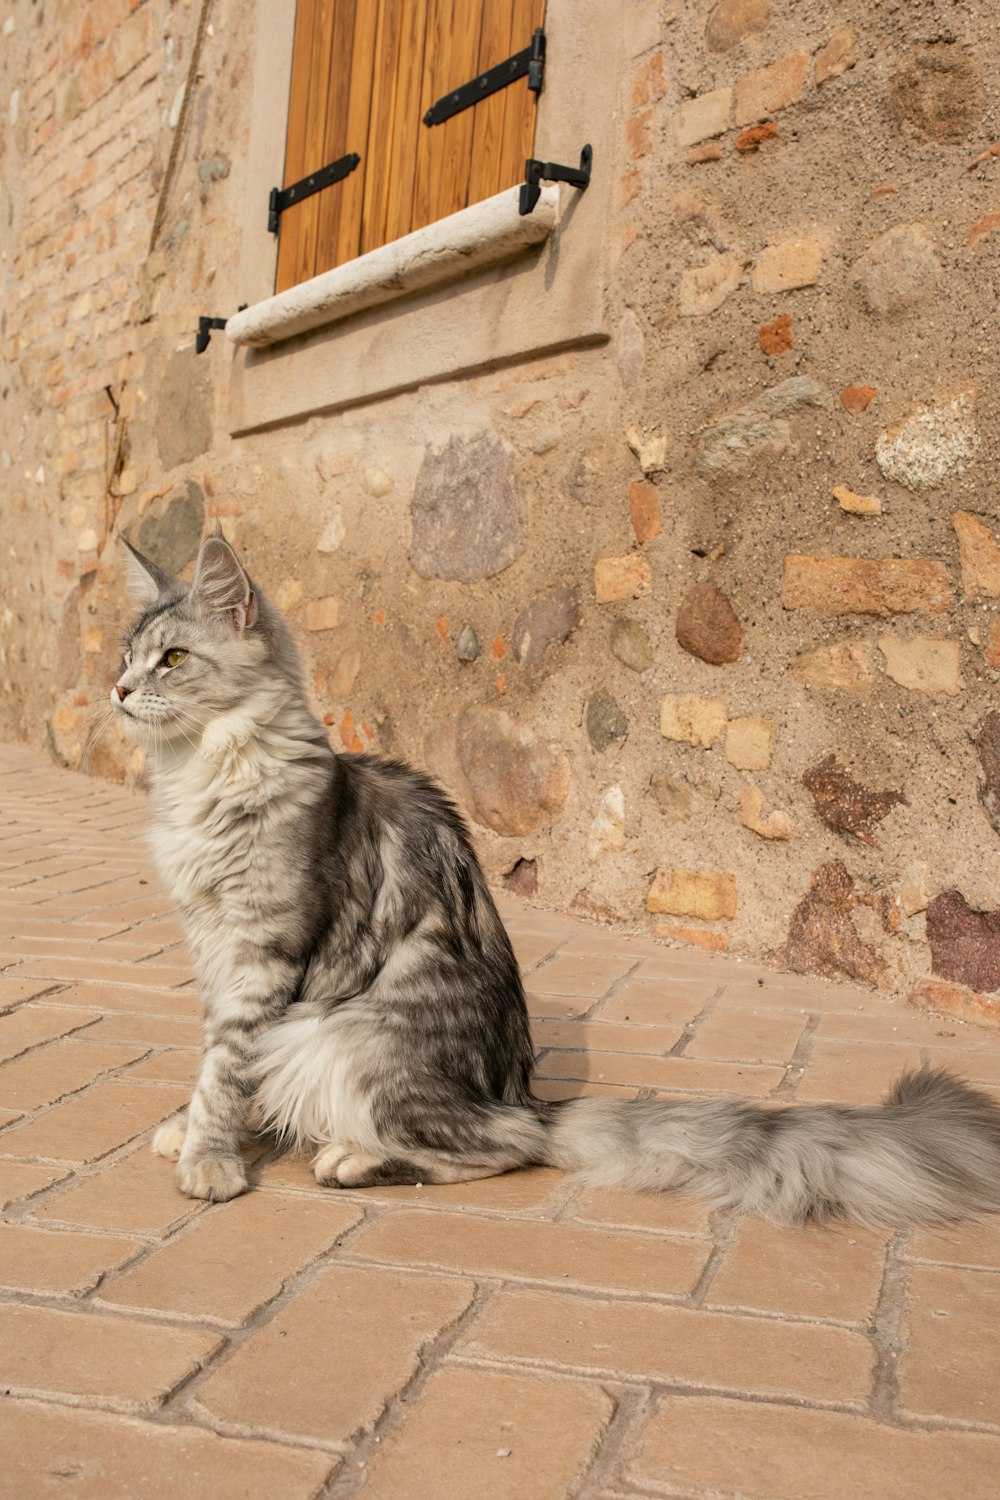 a grey and white cat sitting on a brick sidewalk